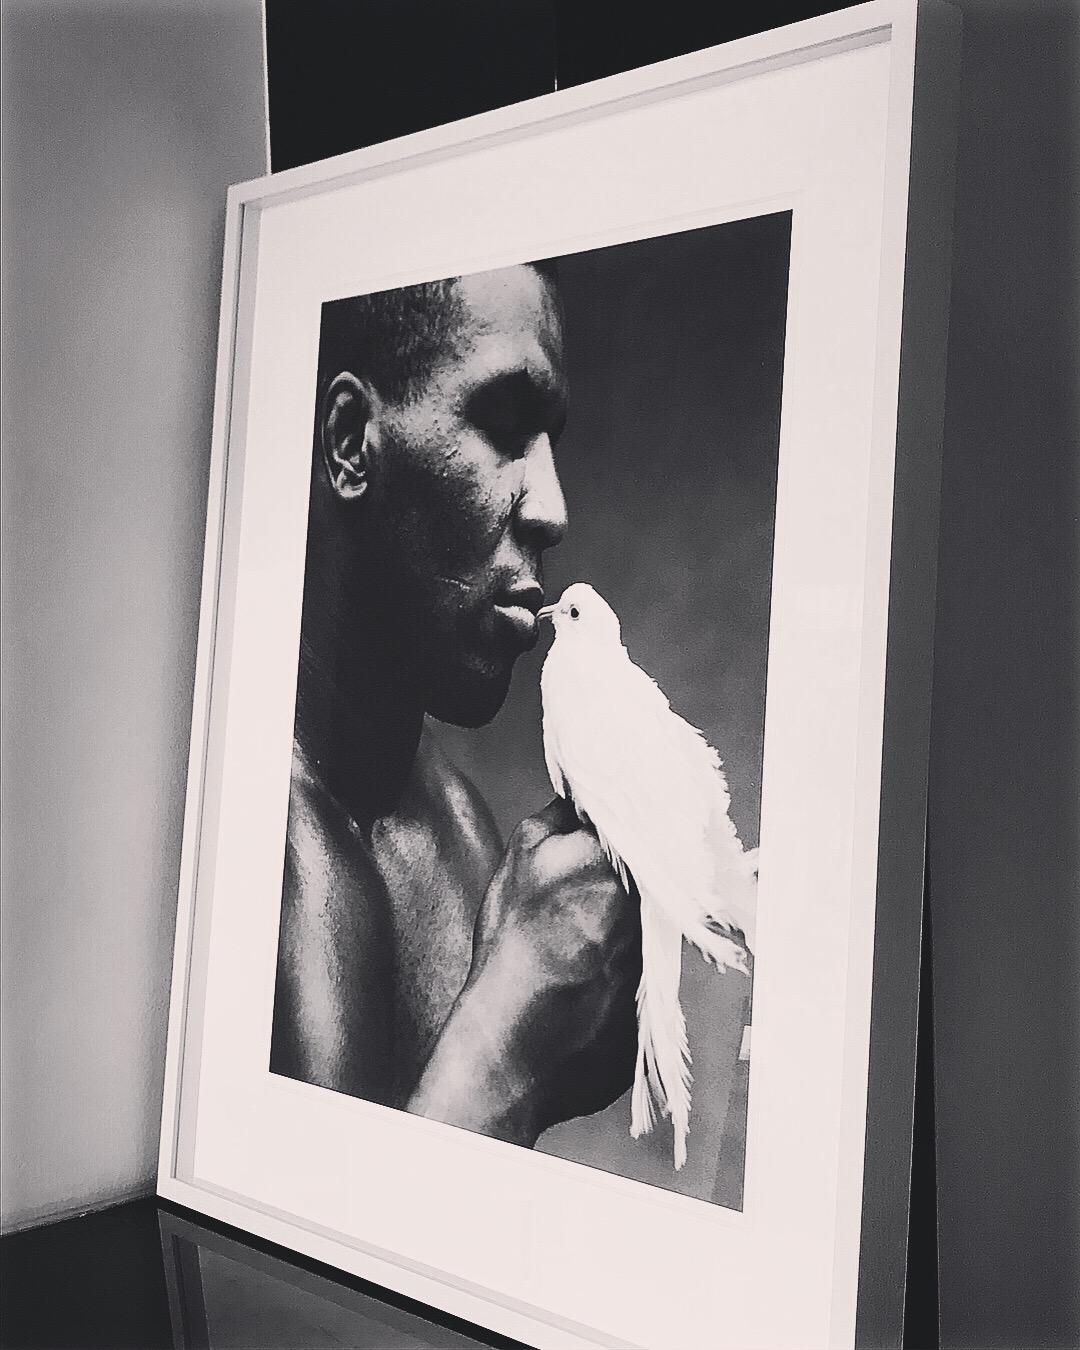 Mike Tyson with Dove - portrait of boxing legend, fine art photography, 1990 - Photograph by Michel Comte